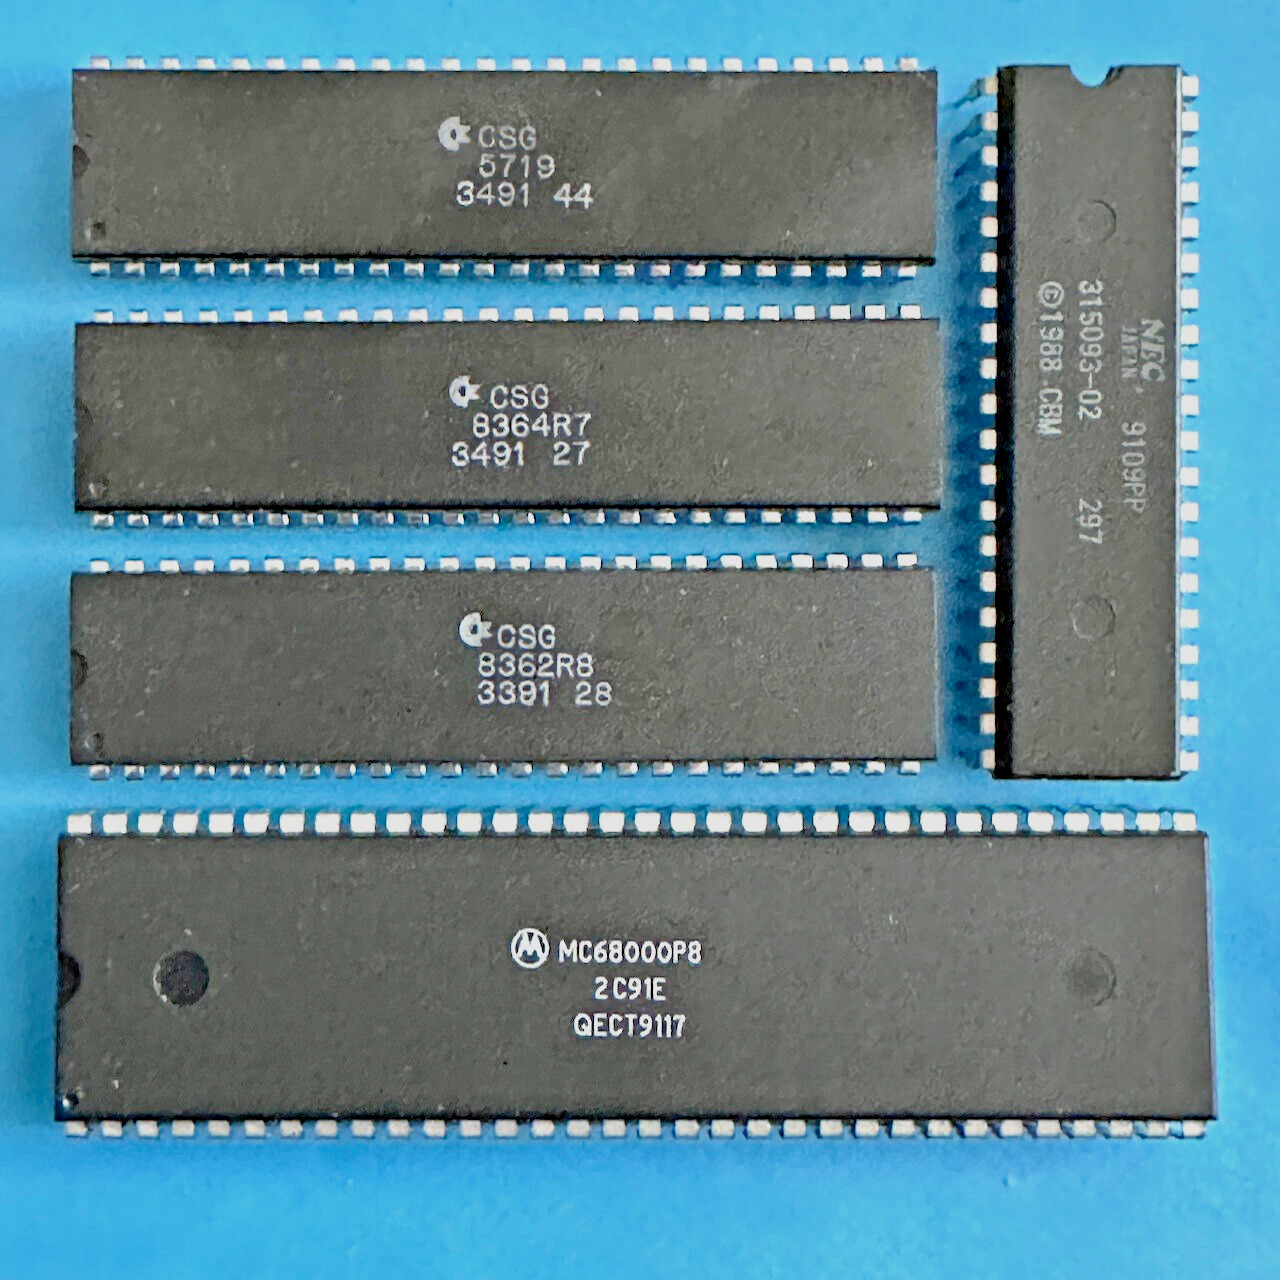 5x Chip ´S / Paula 8364R7/Denise 8362R8, Gary 5791 / Kick 1.3 / CPU AMIGA500/